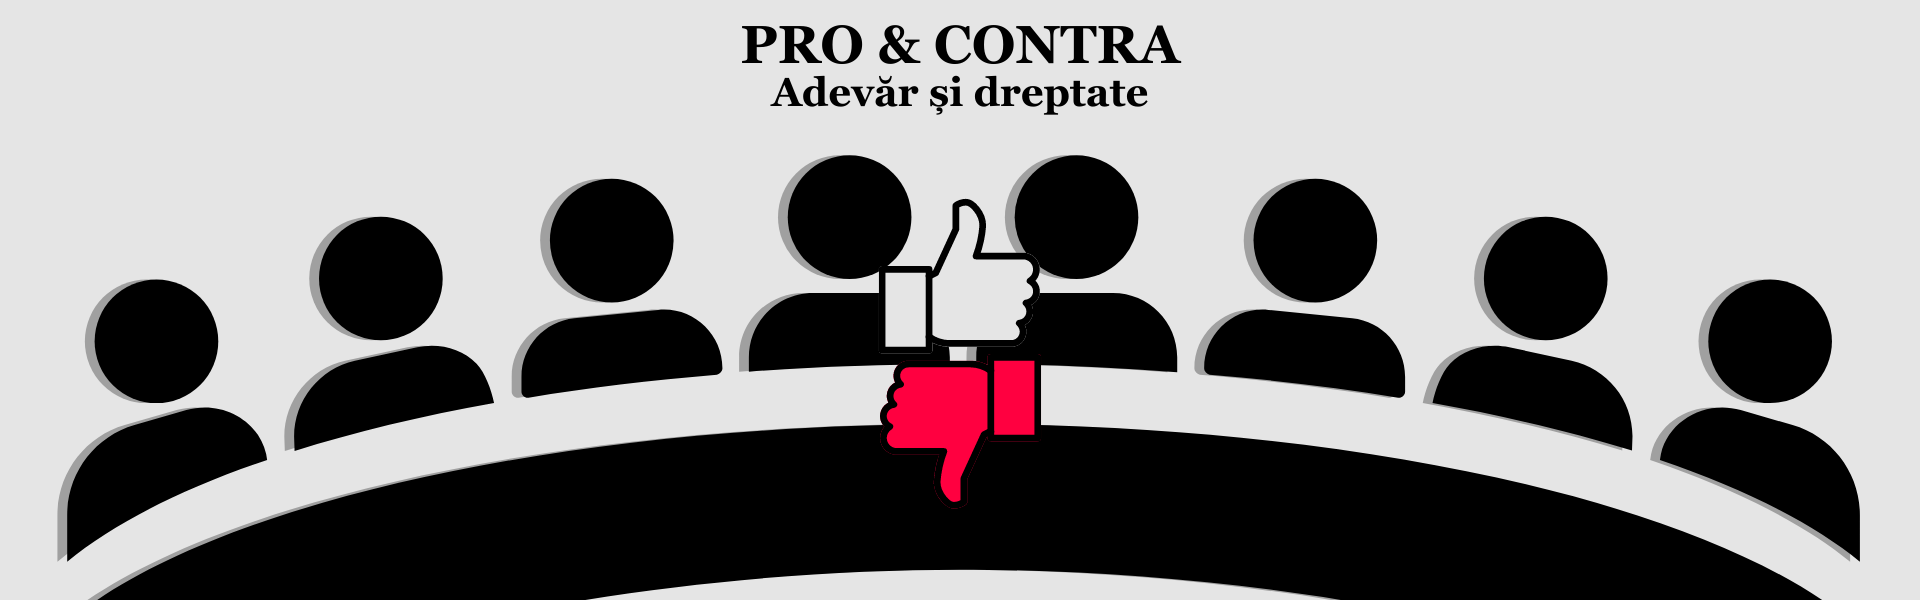 Pro & Contra